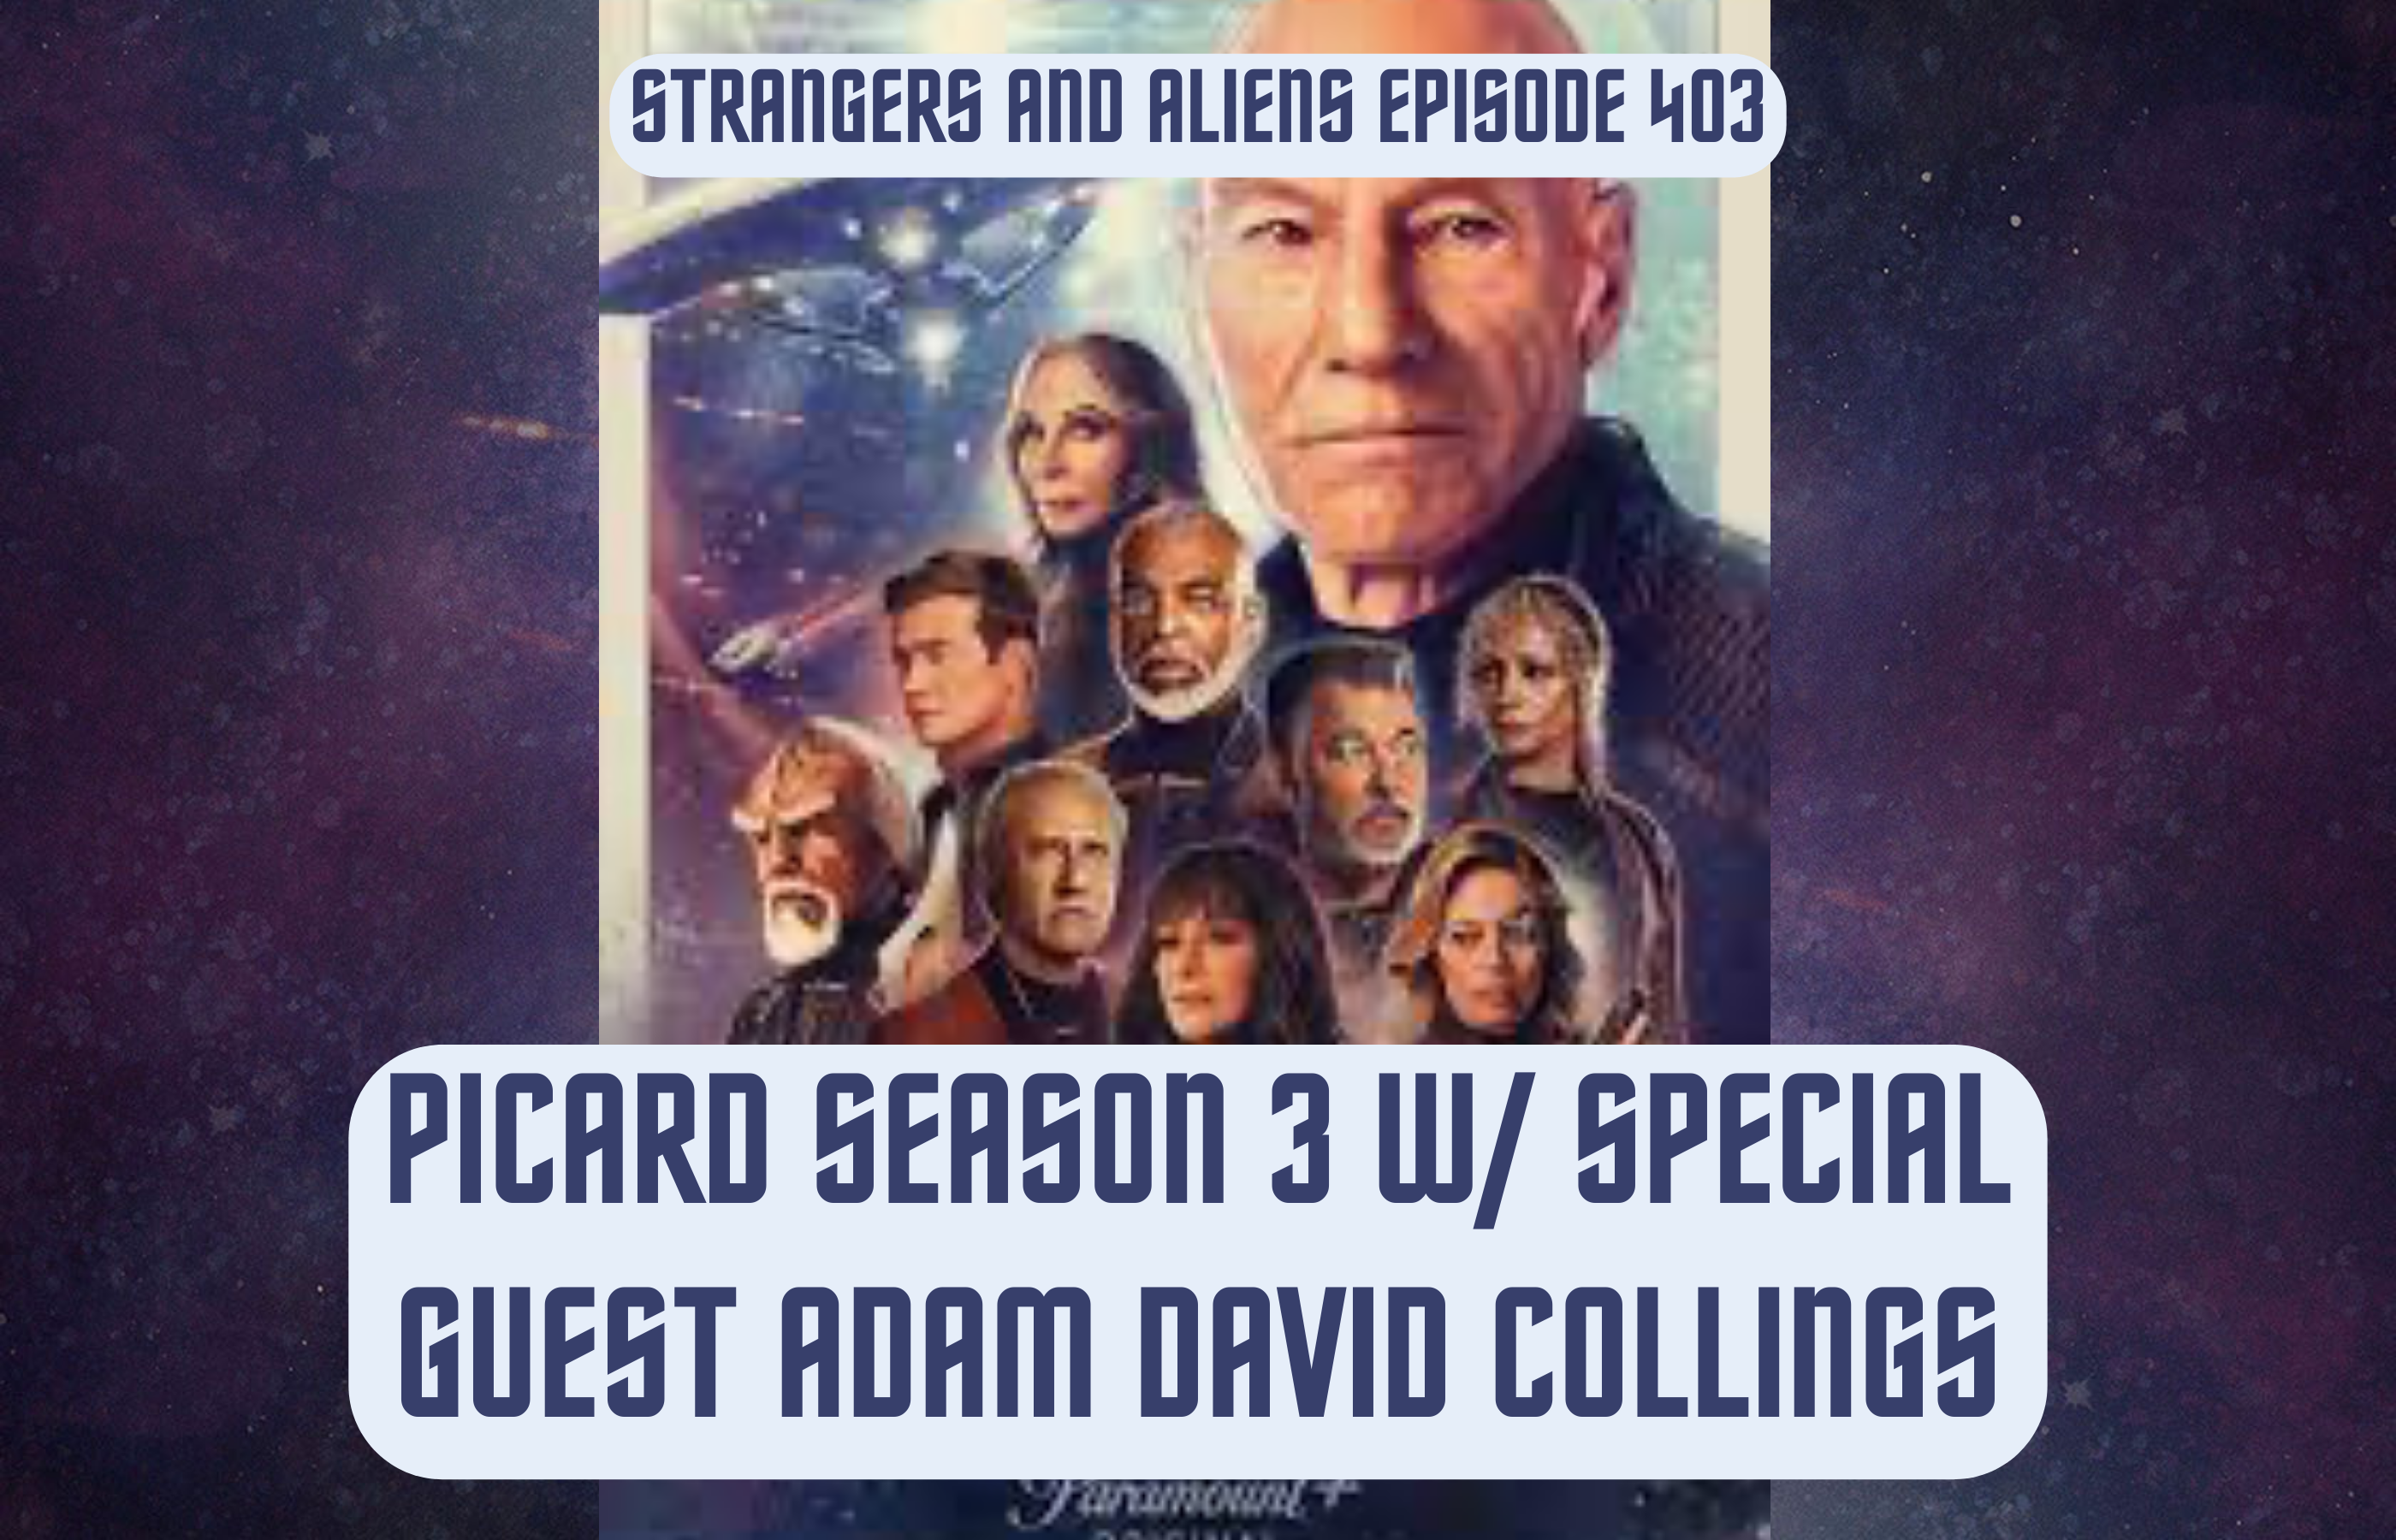 Picard Season 3 w/ Special Guest Adam David Collings – SA403